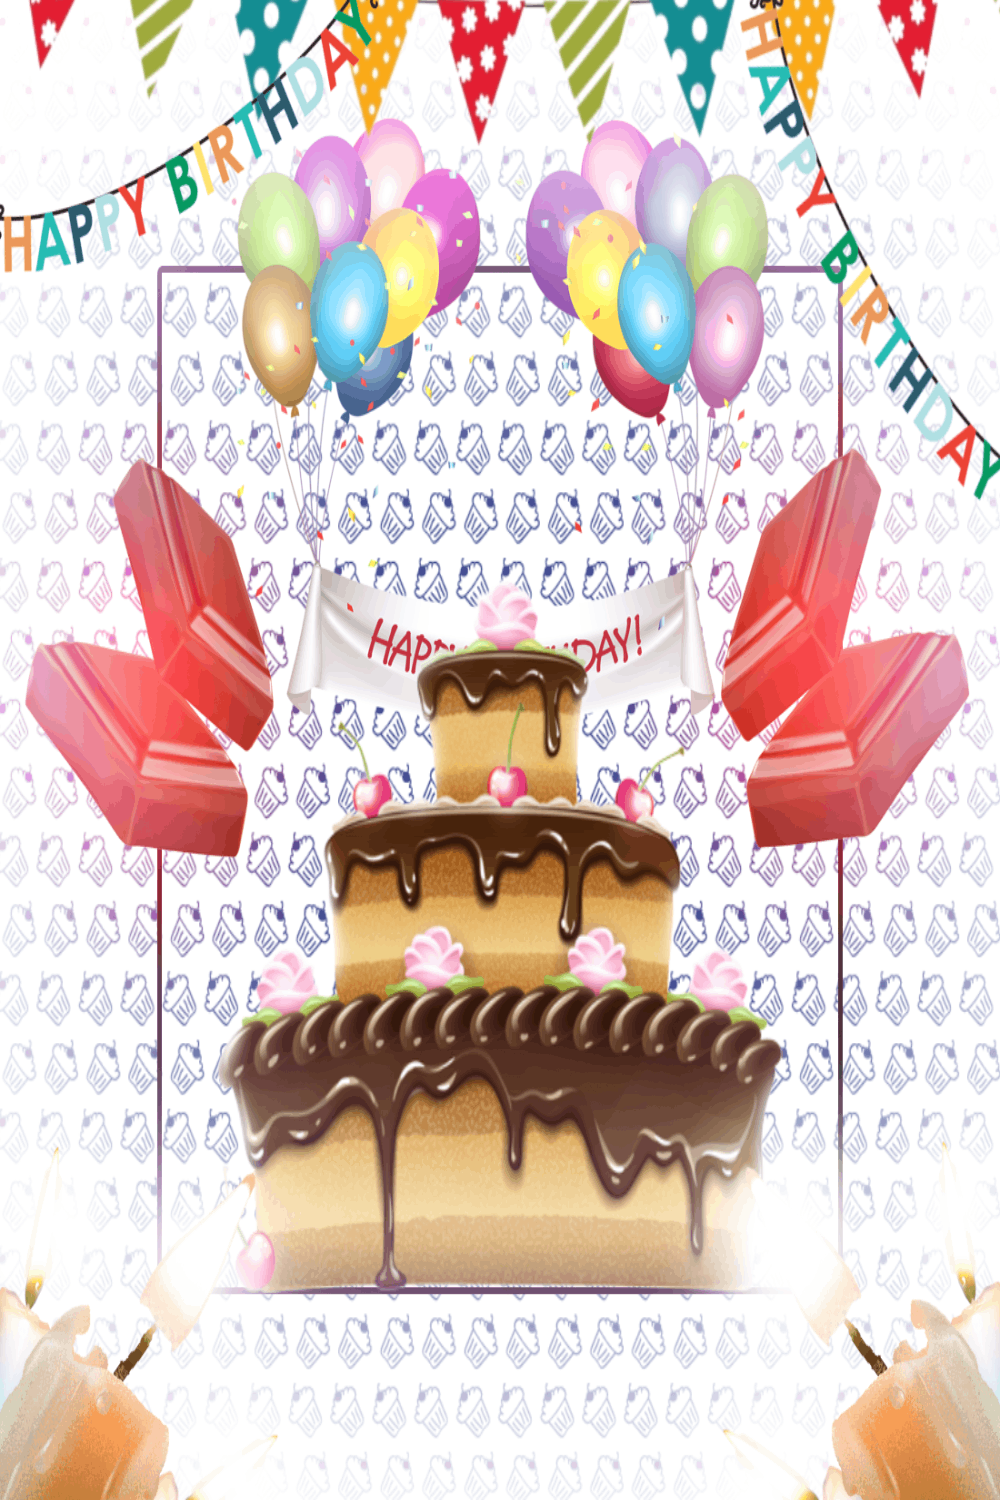 Birthday Card Design pinterest image.